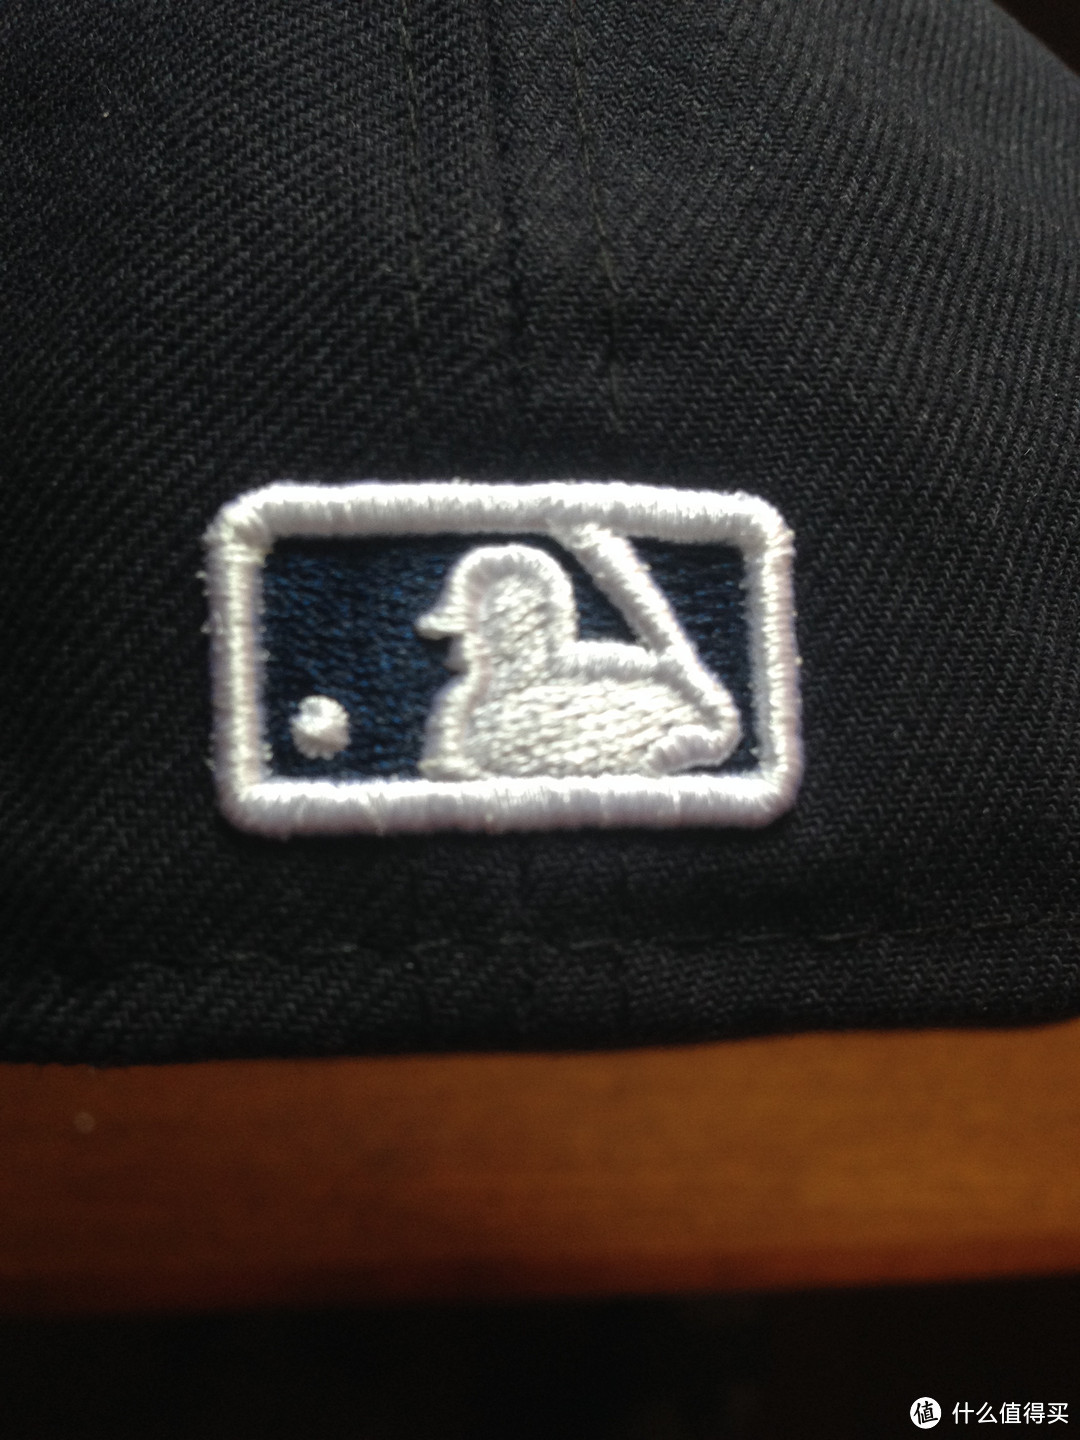 第一次海淘购物Tommy Hifiger钱包&MLB棒球帽